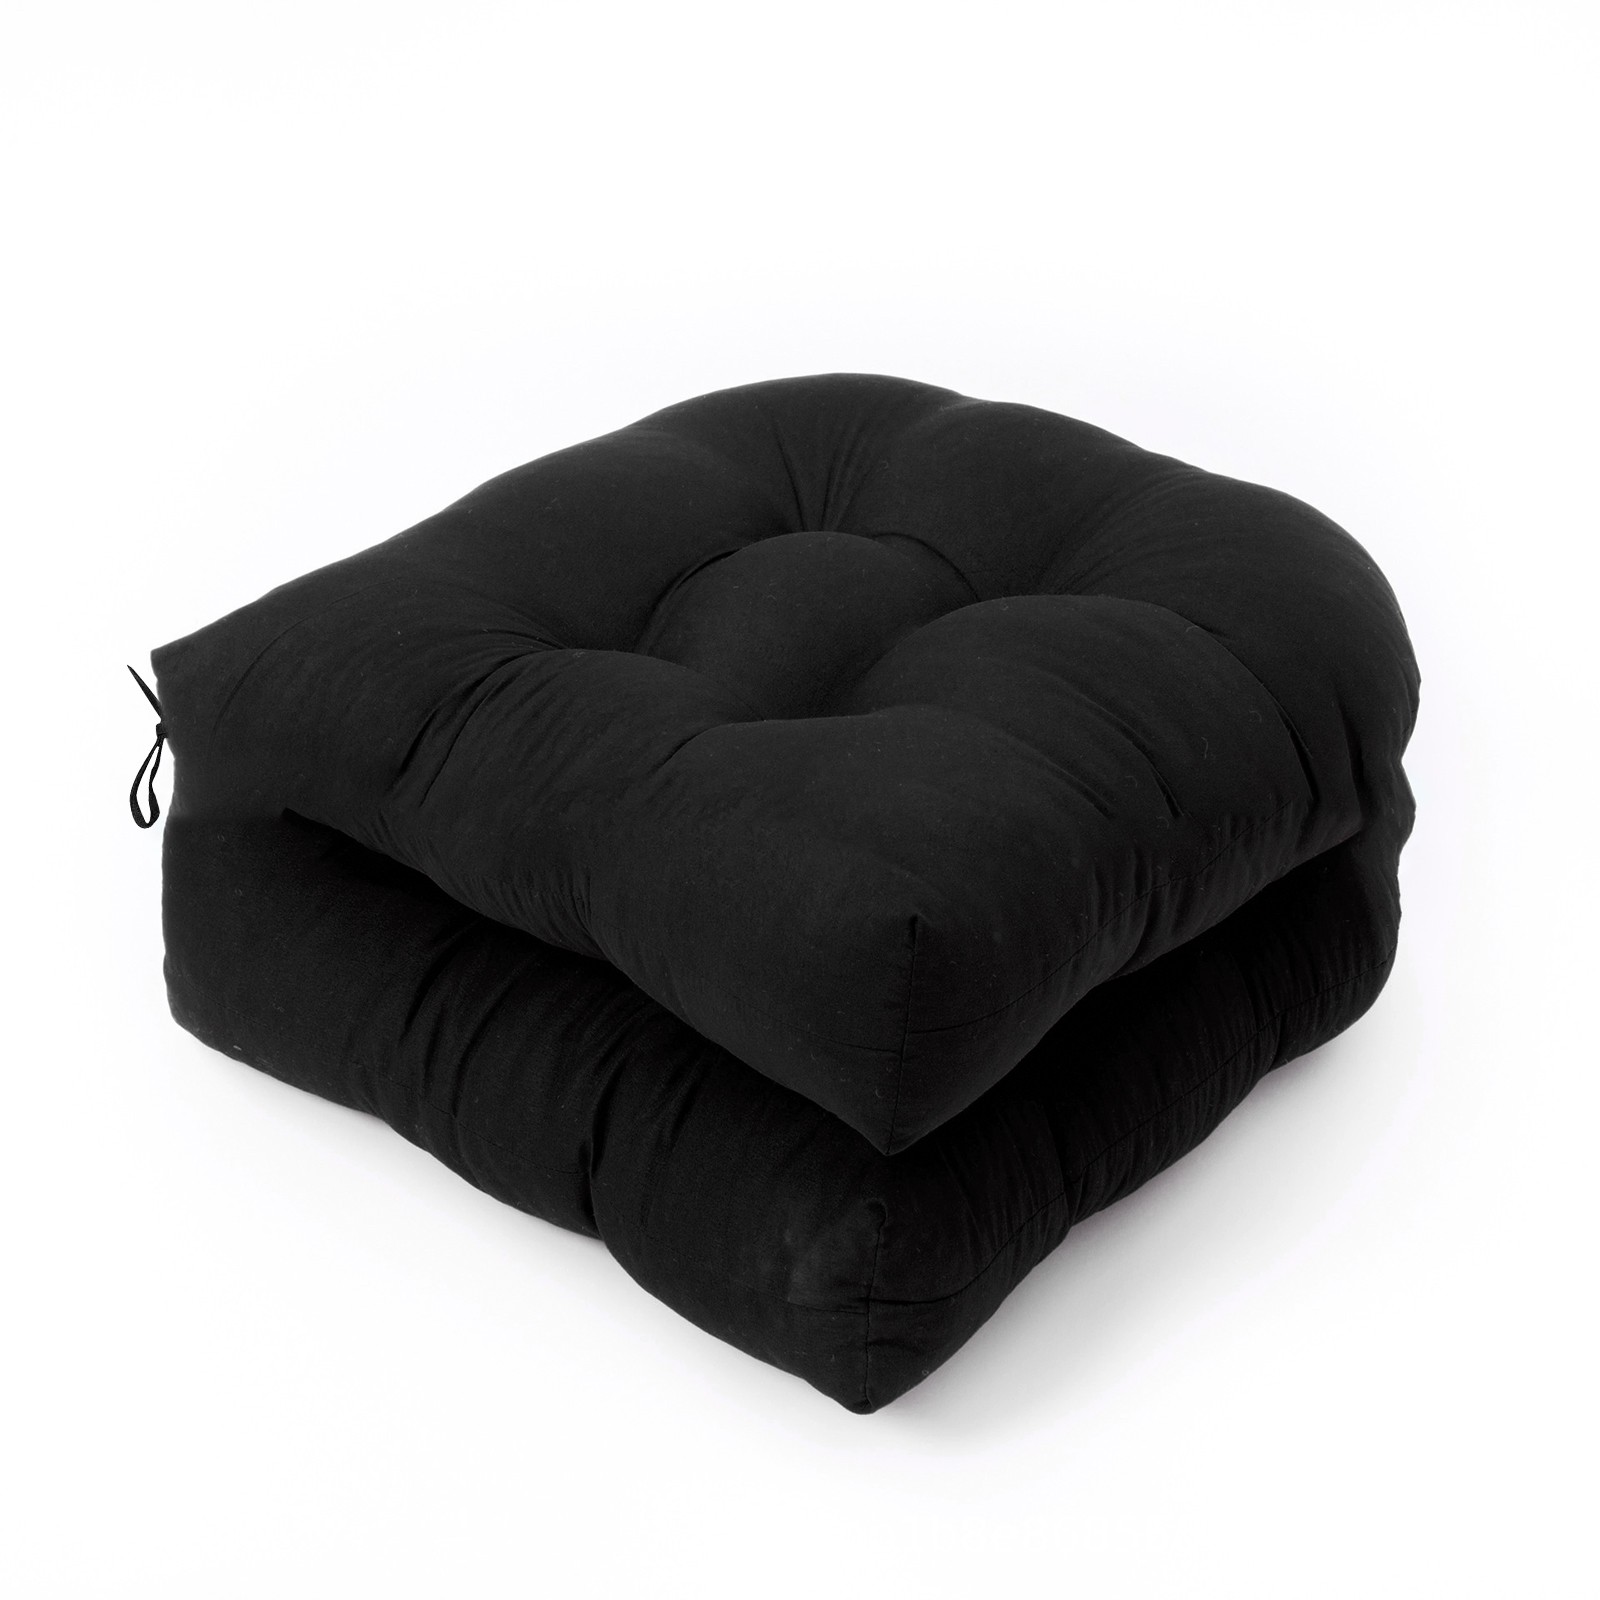 Gerich U-shaped Cushion Sofa Cushion Rattan Chair Black Cushion Terrace Cushion for Outdoor Indoor 2 Pcs - image 1 of 14